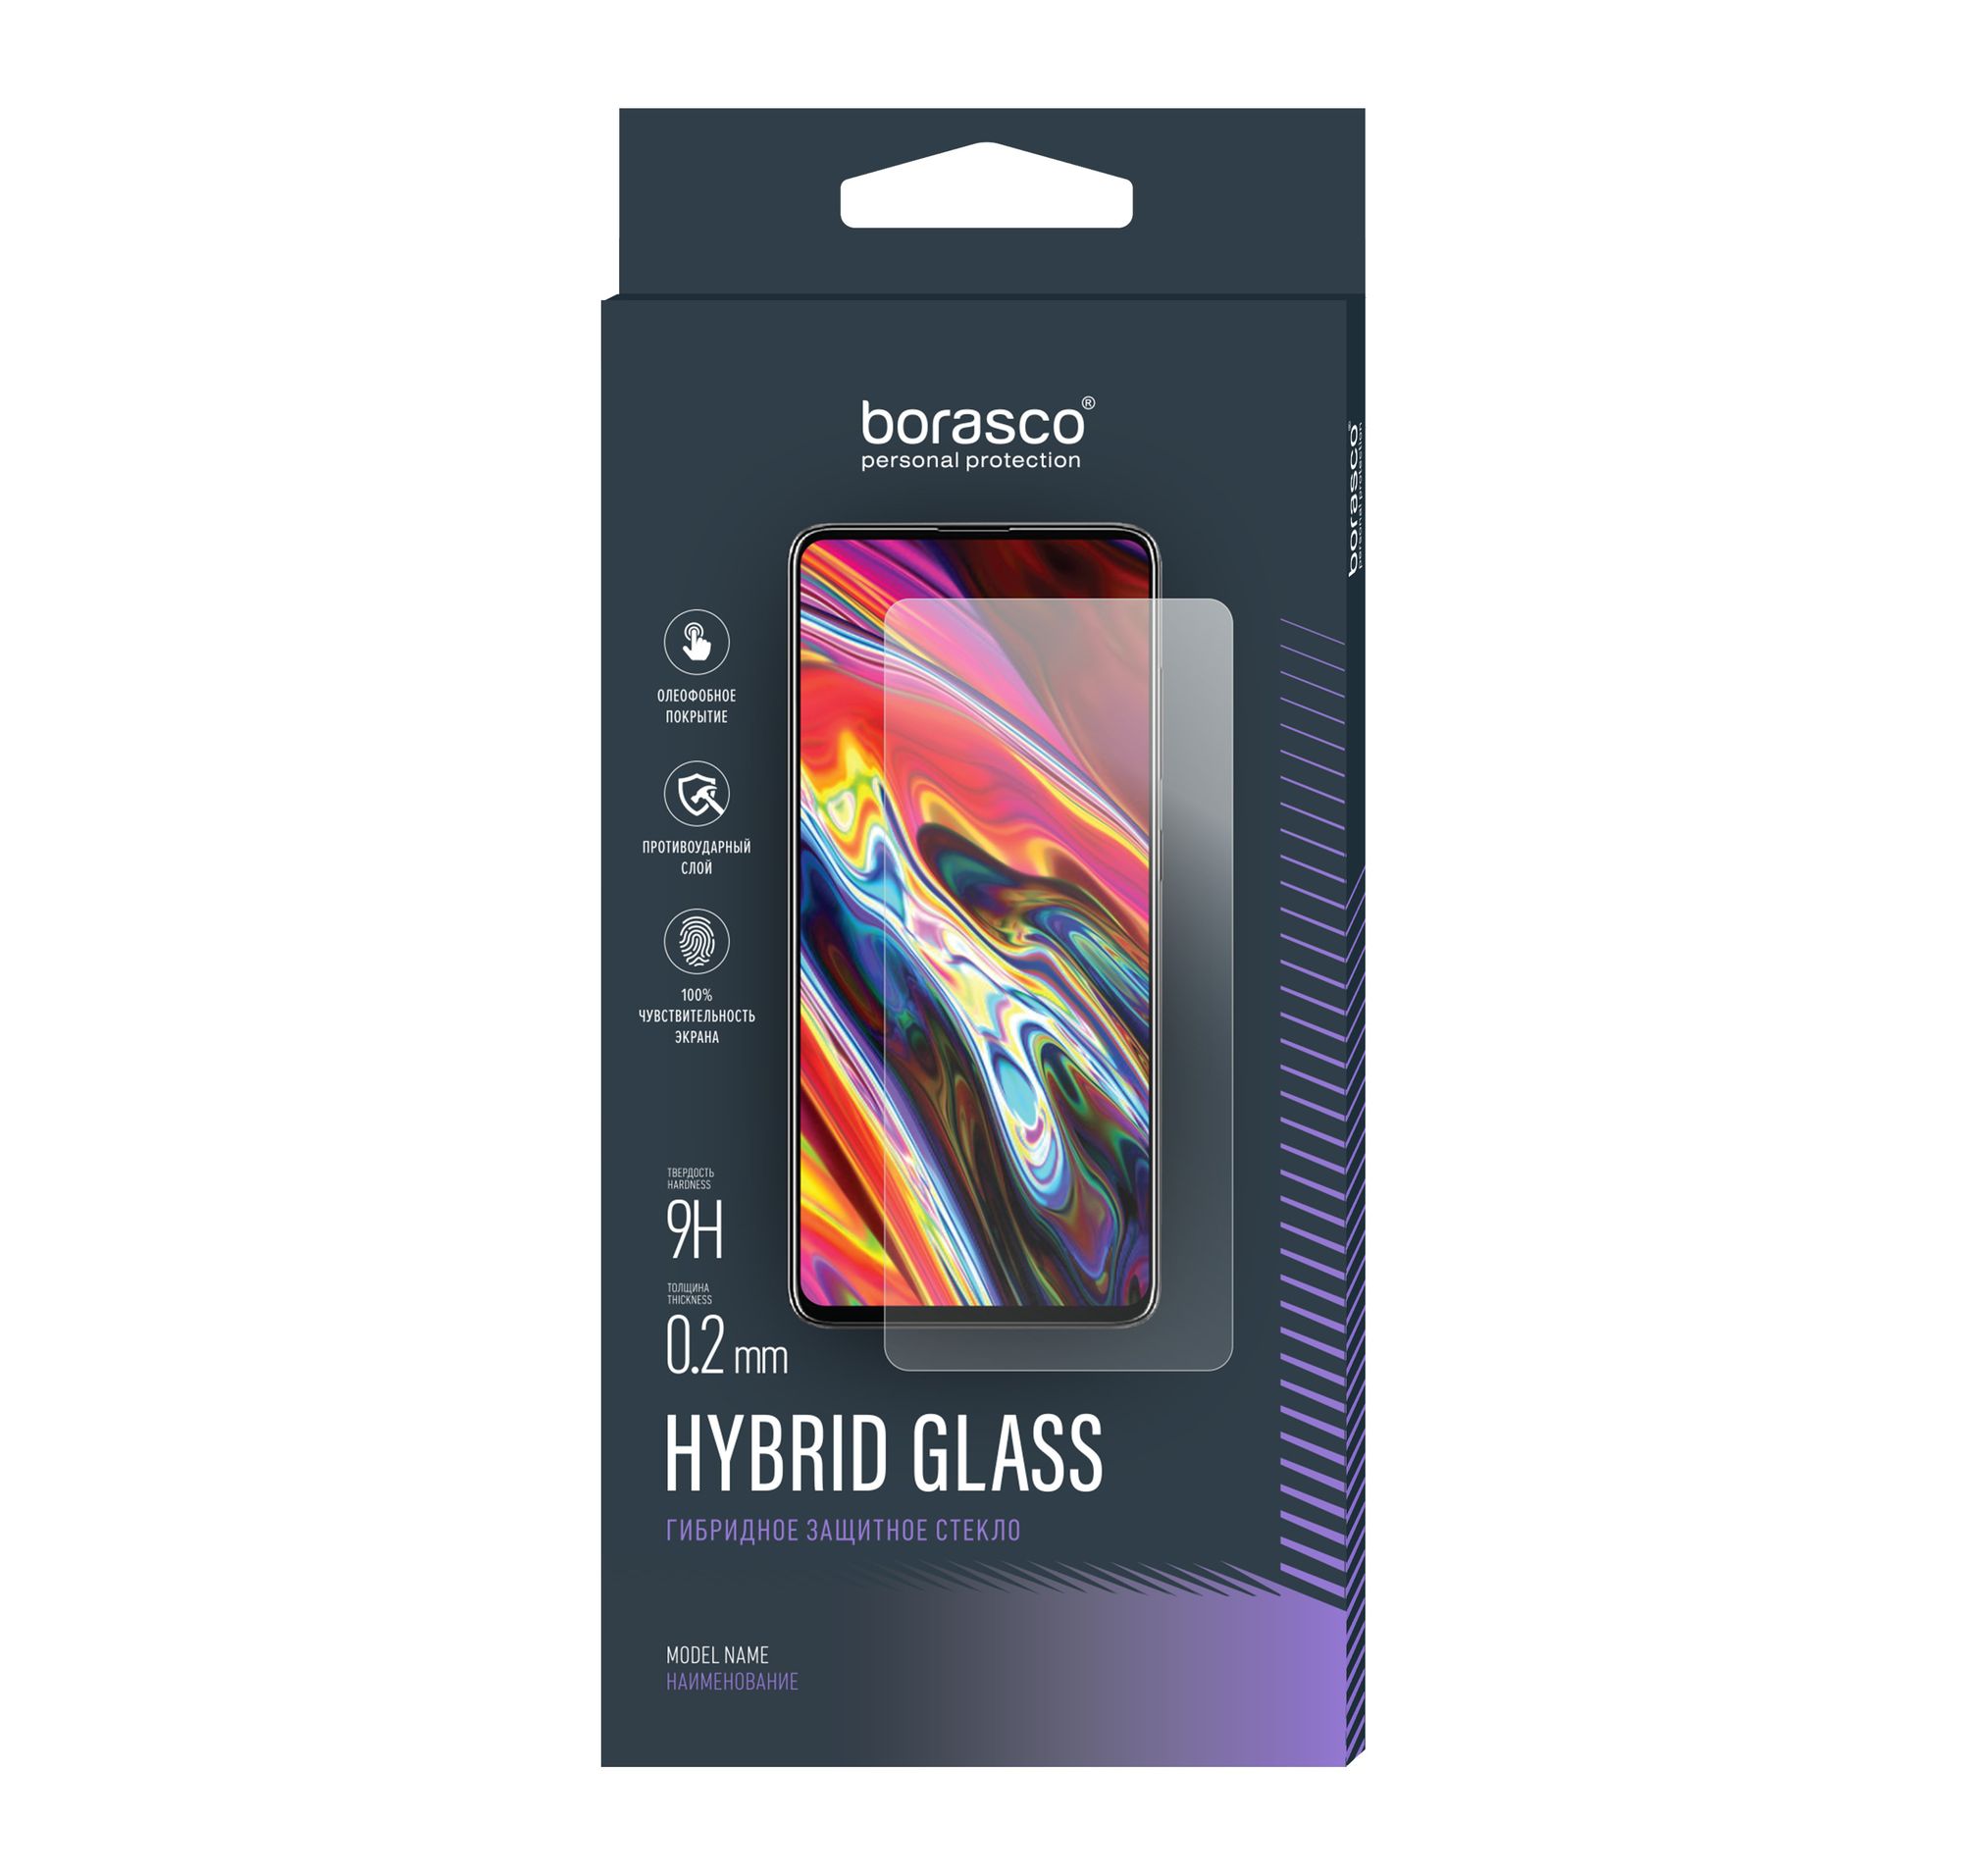 Стекло защитное Hybrid Glass VSP 0,26 мм для Huawei P20 Lite защитное стекло на huawei p20 lite nova 3e